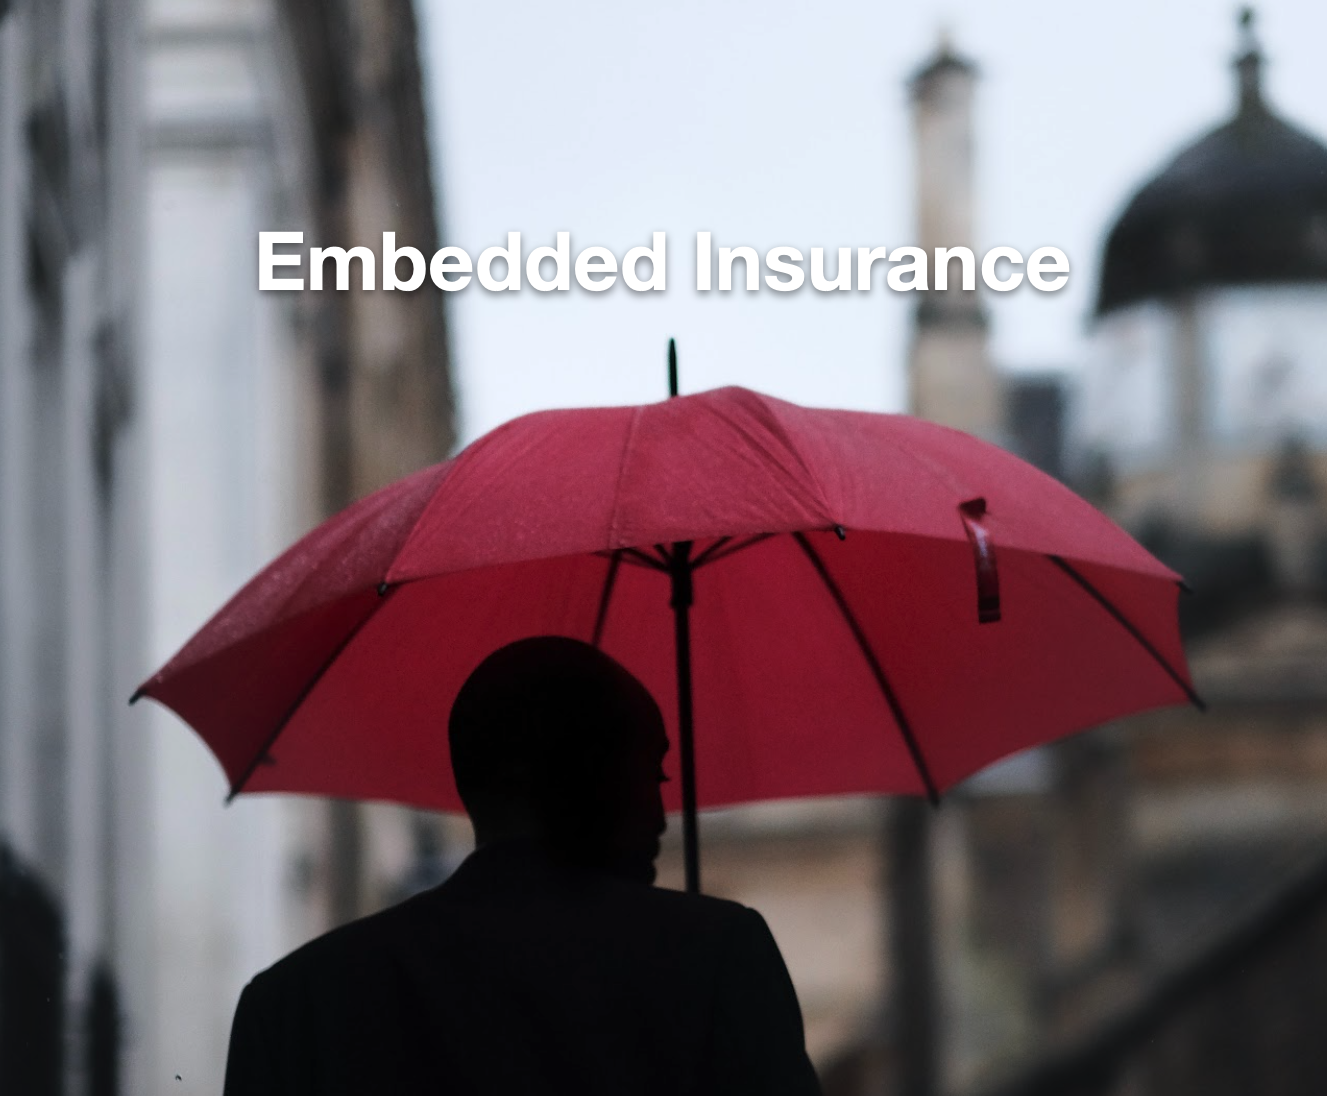 Embedded insurance photo